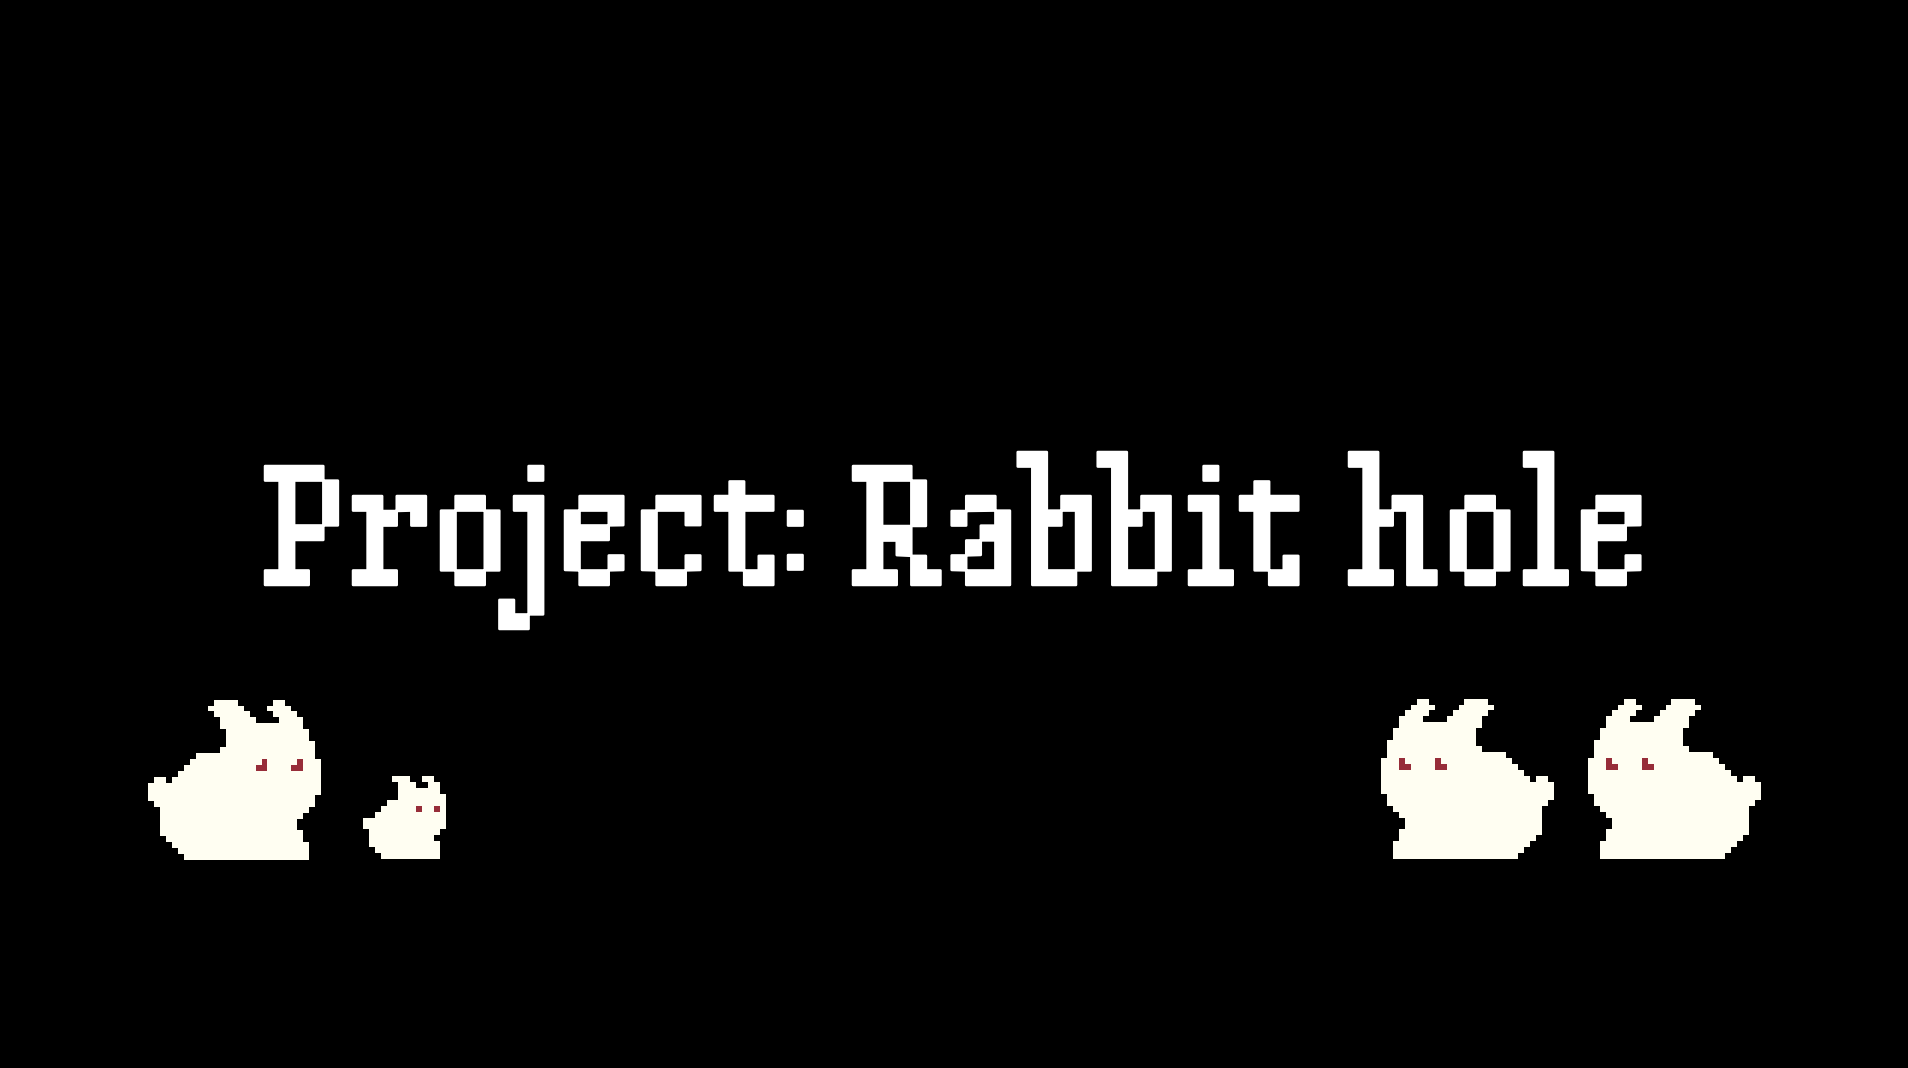 Project: Rabbit hole